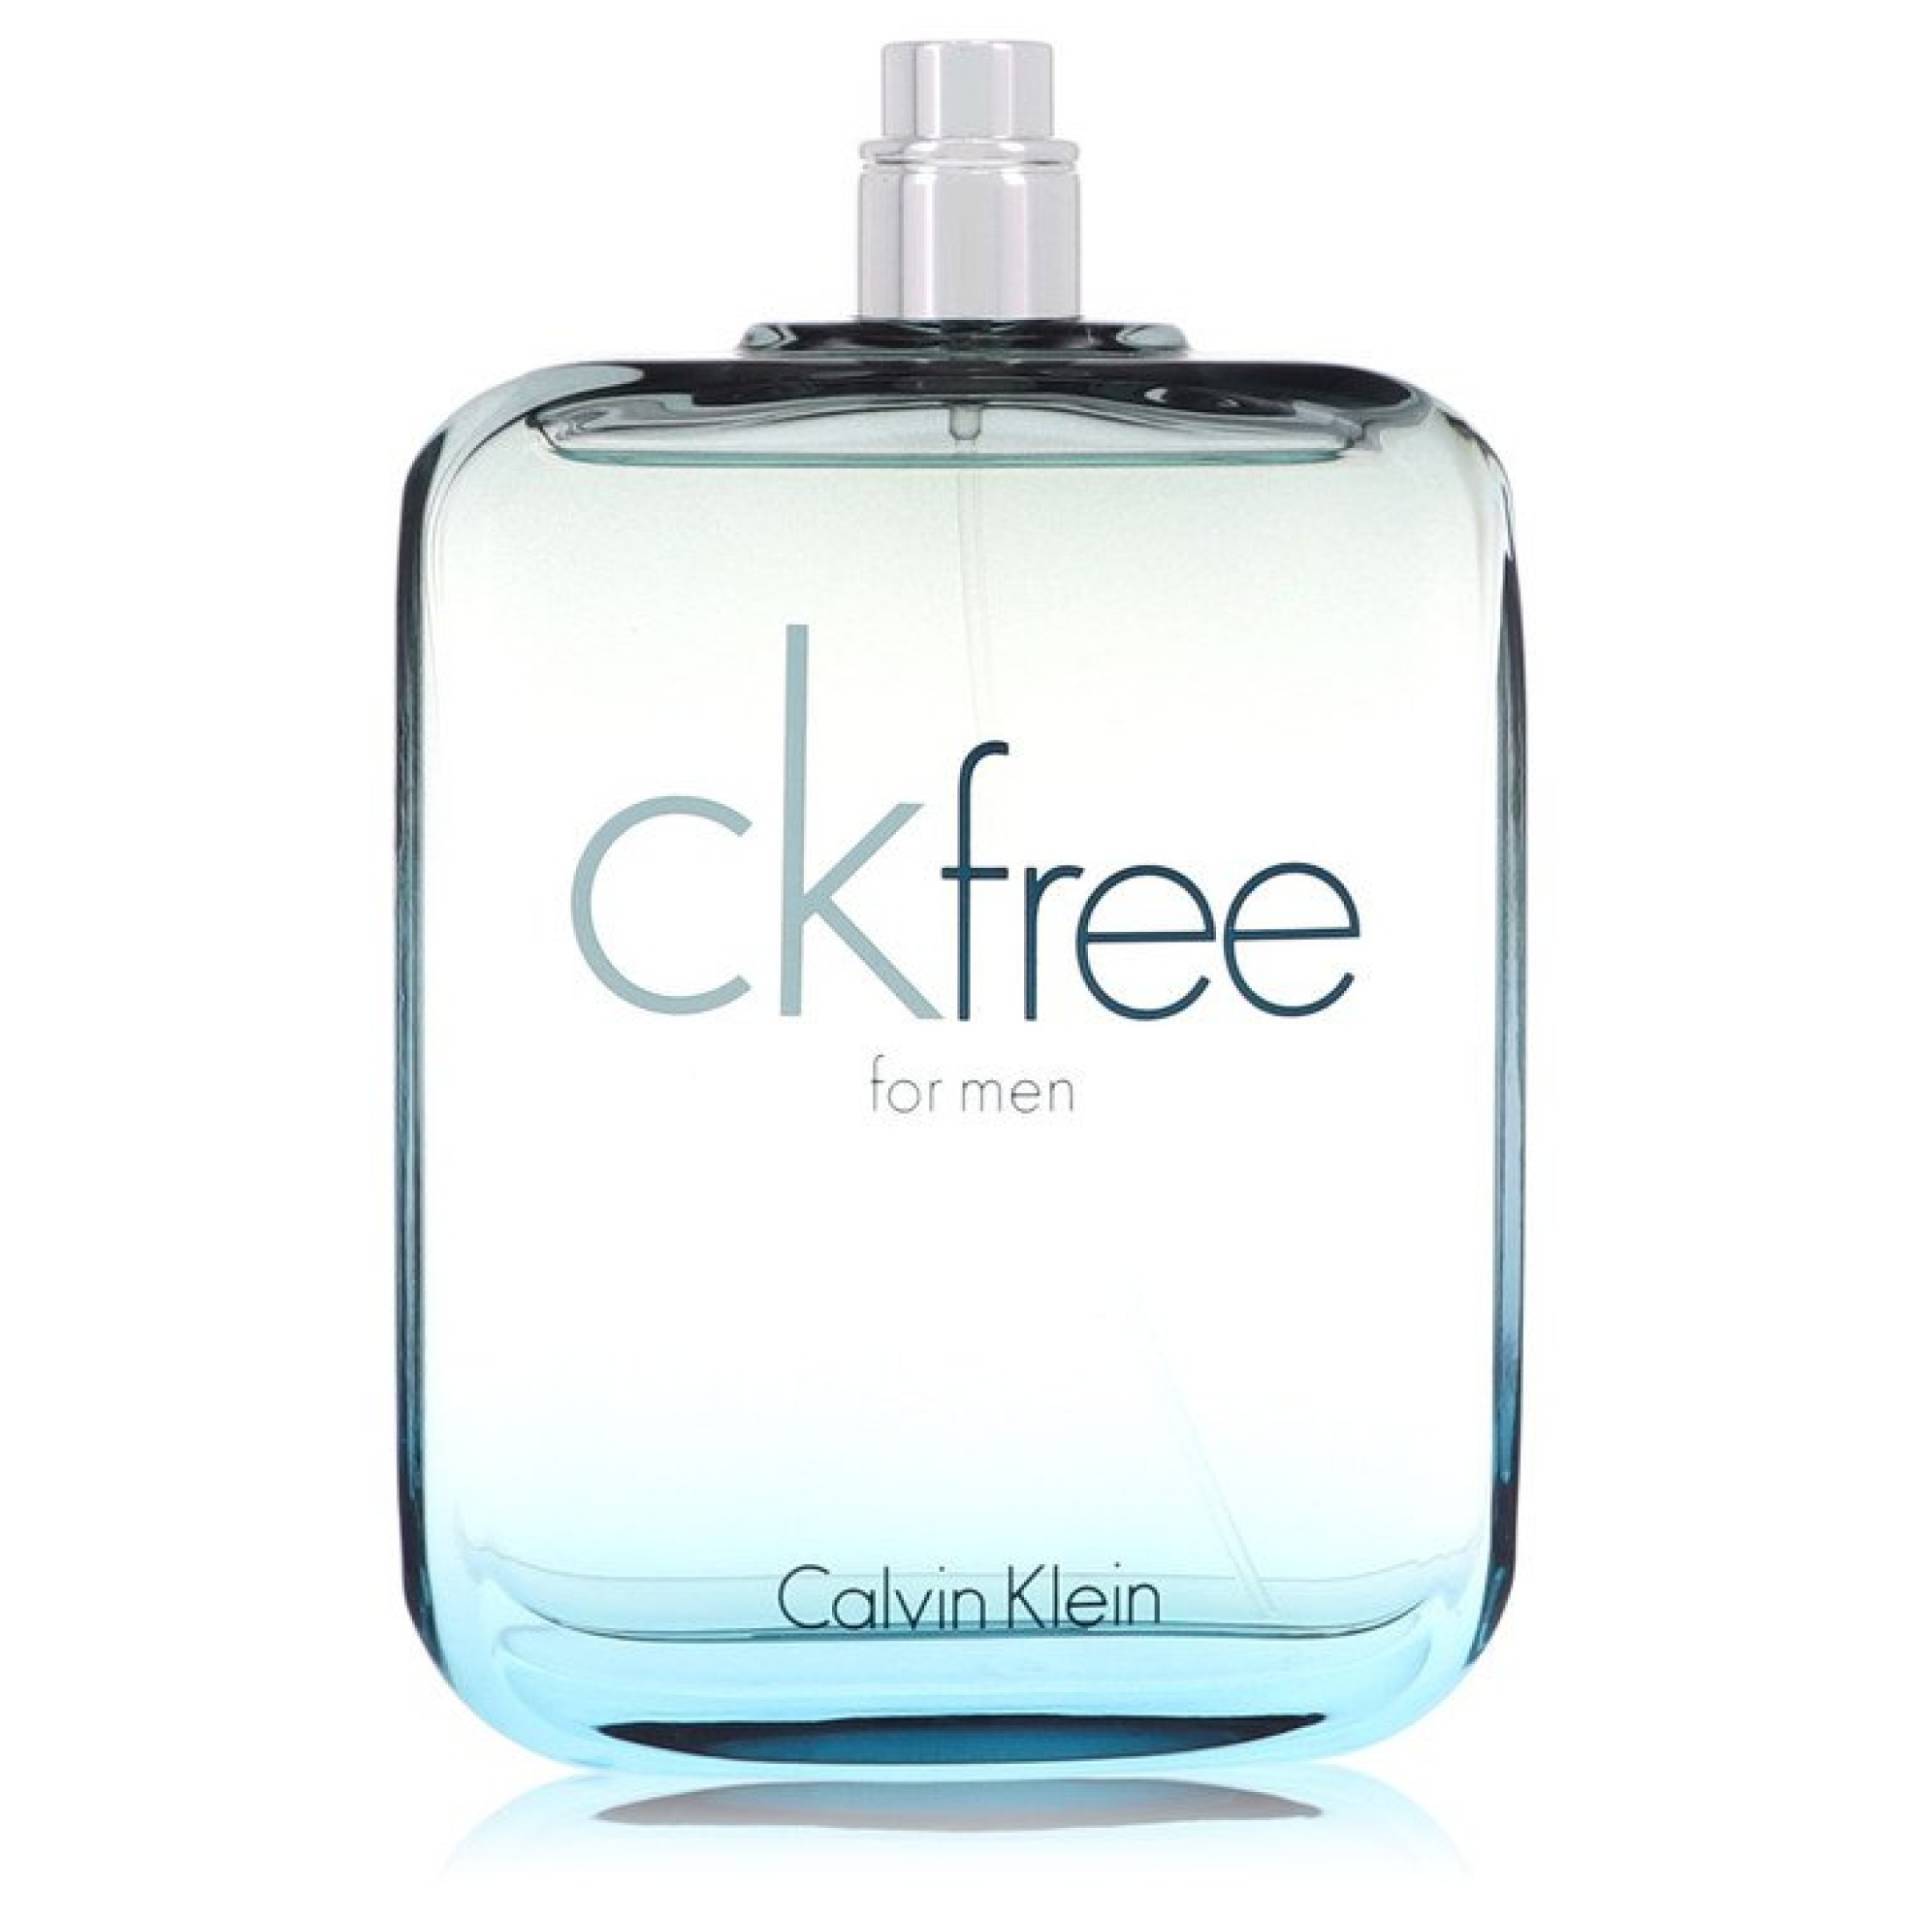 Calvin Klein CK Free Eau De Toilette Spray (Tester) 100 ml von Calvin Klein